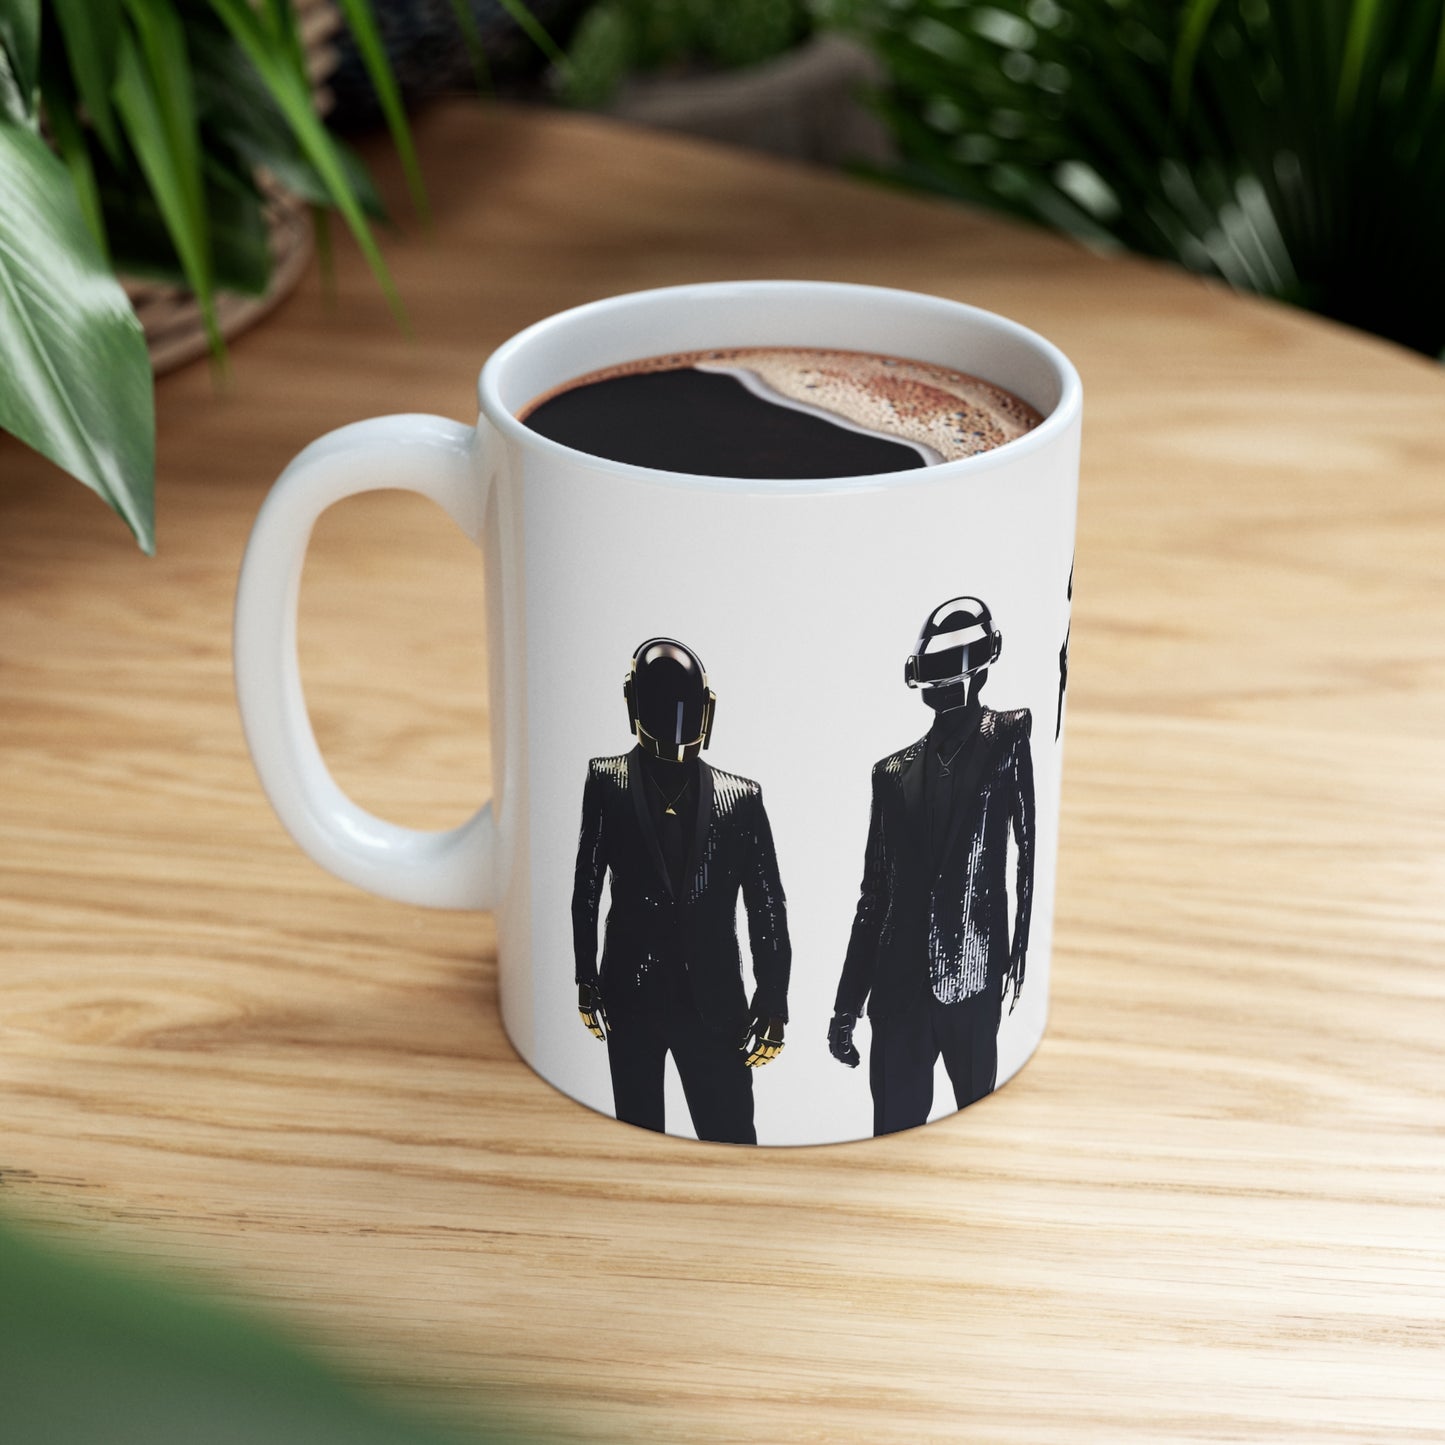 Daft Punk In Black Suits White Ceramic Mug